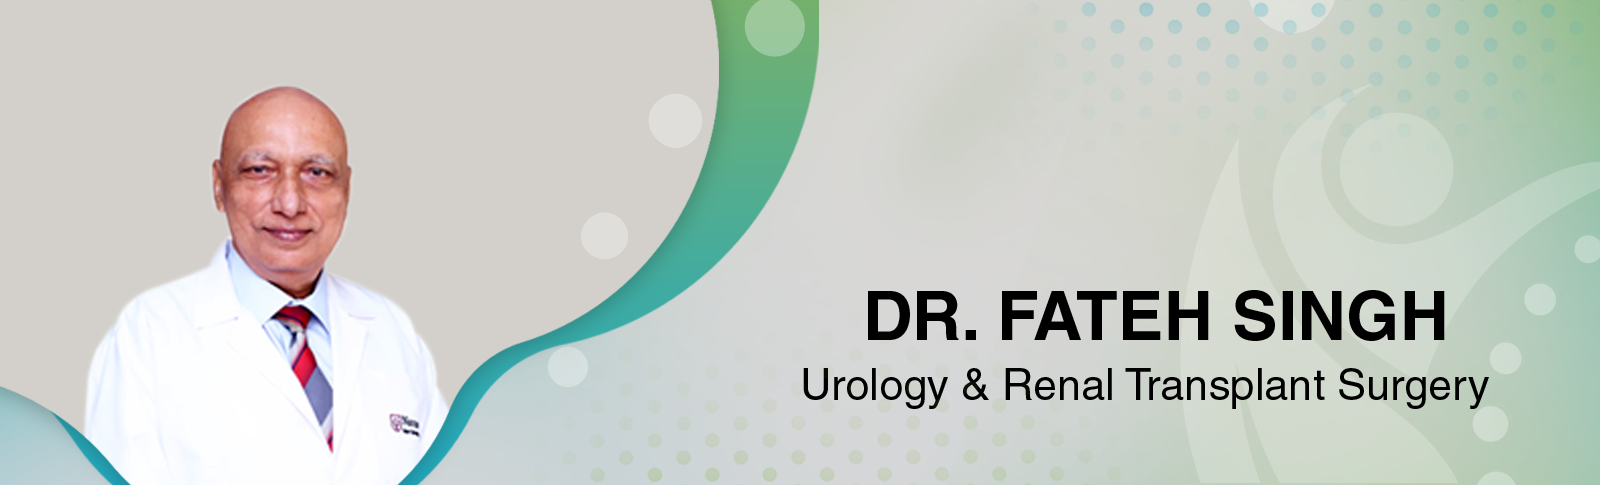 Dr. Fateh Singh